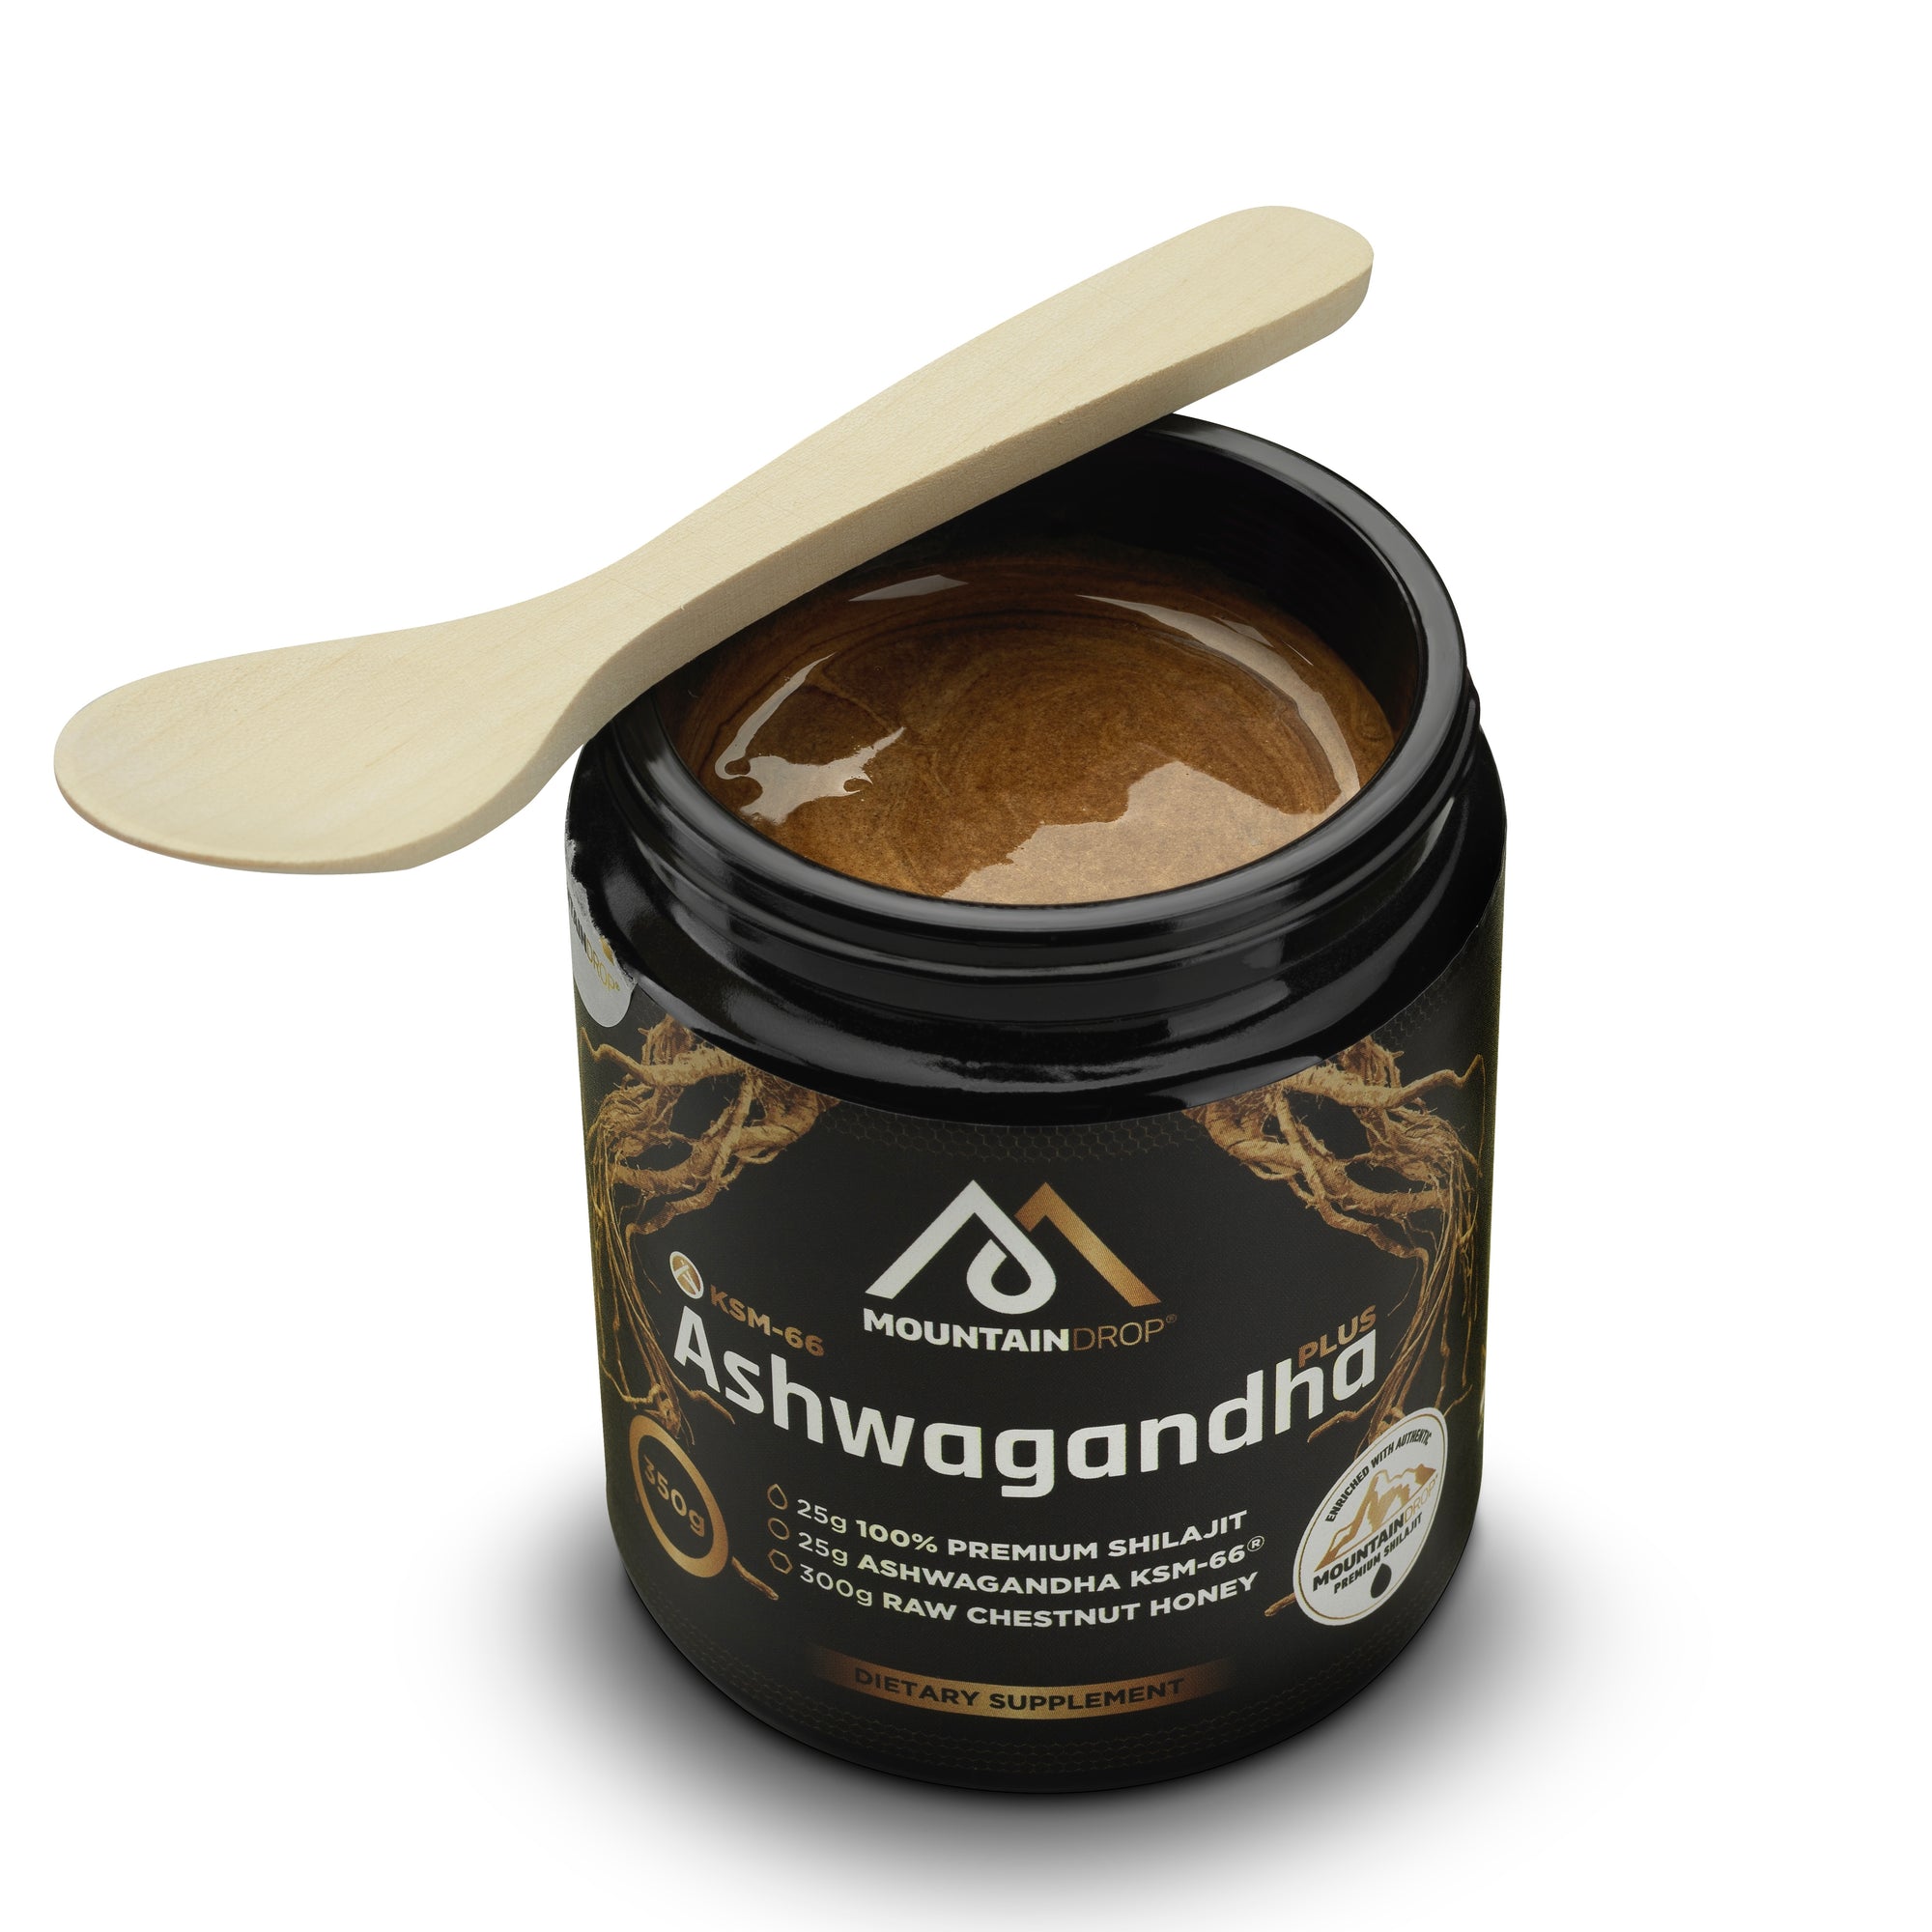 Mountaindrop ASHWAGANDHA - Ashwagandha con Shilajit e miele di castagno 350g - Rilassamento fisico e mentale